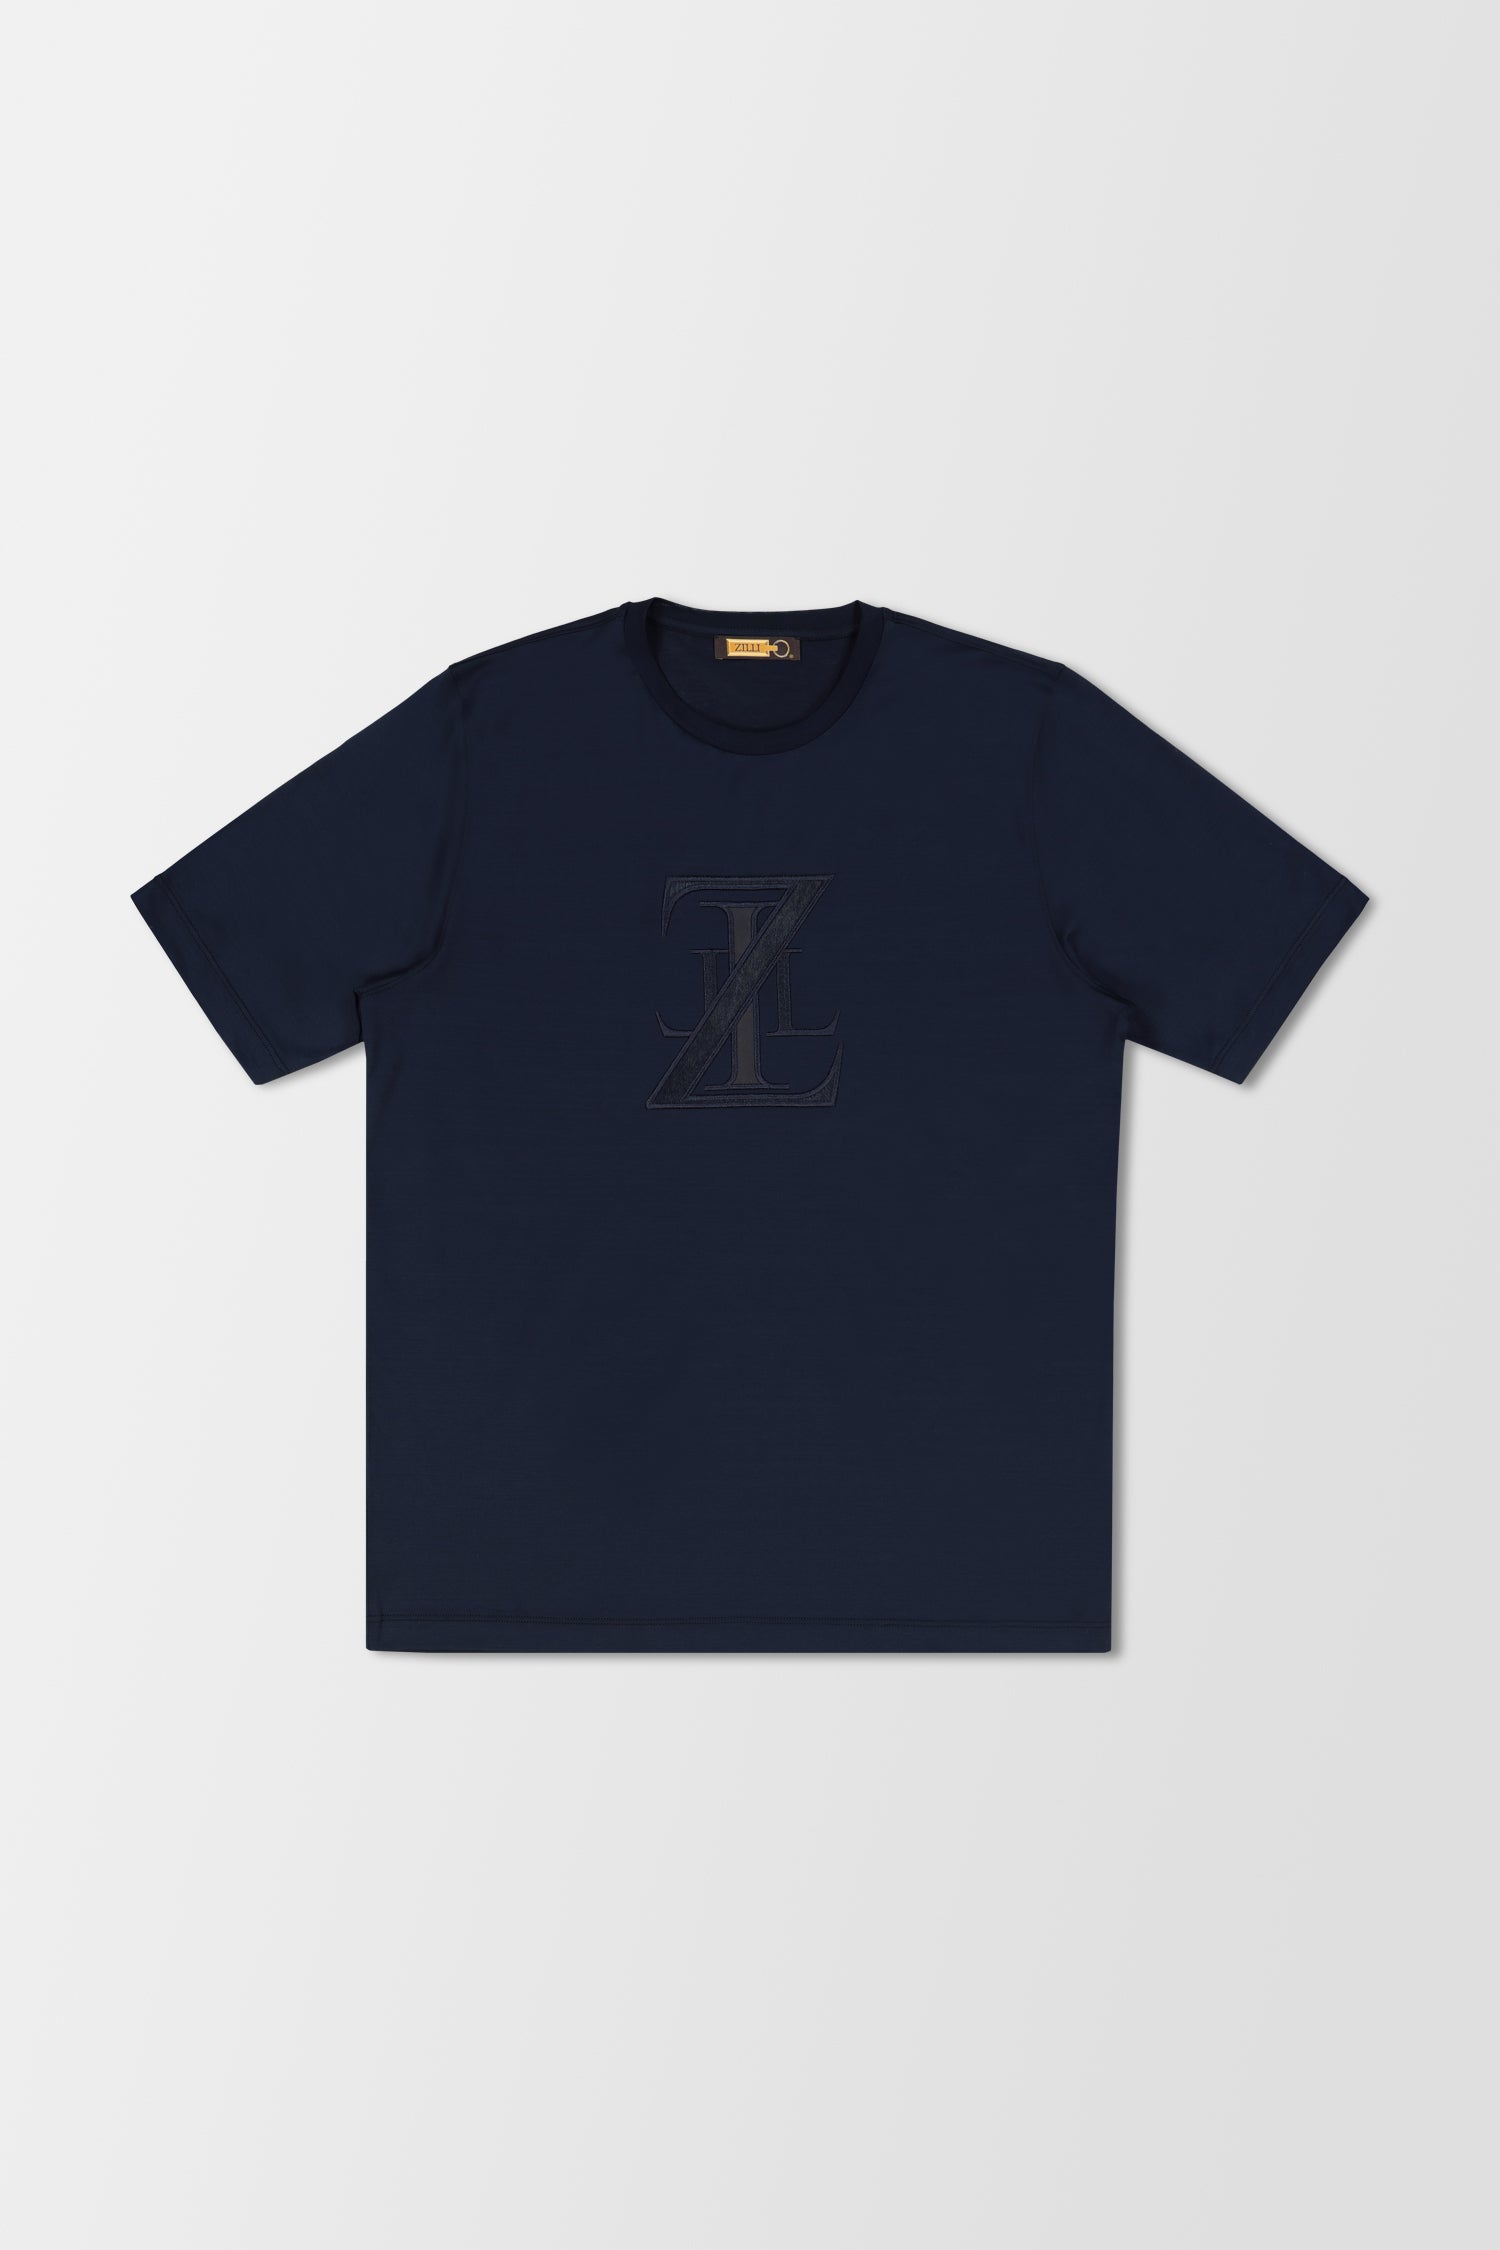 Louis Vuitton Brick Printed T-Shirt